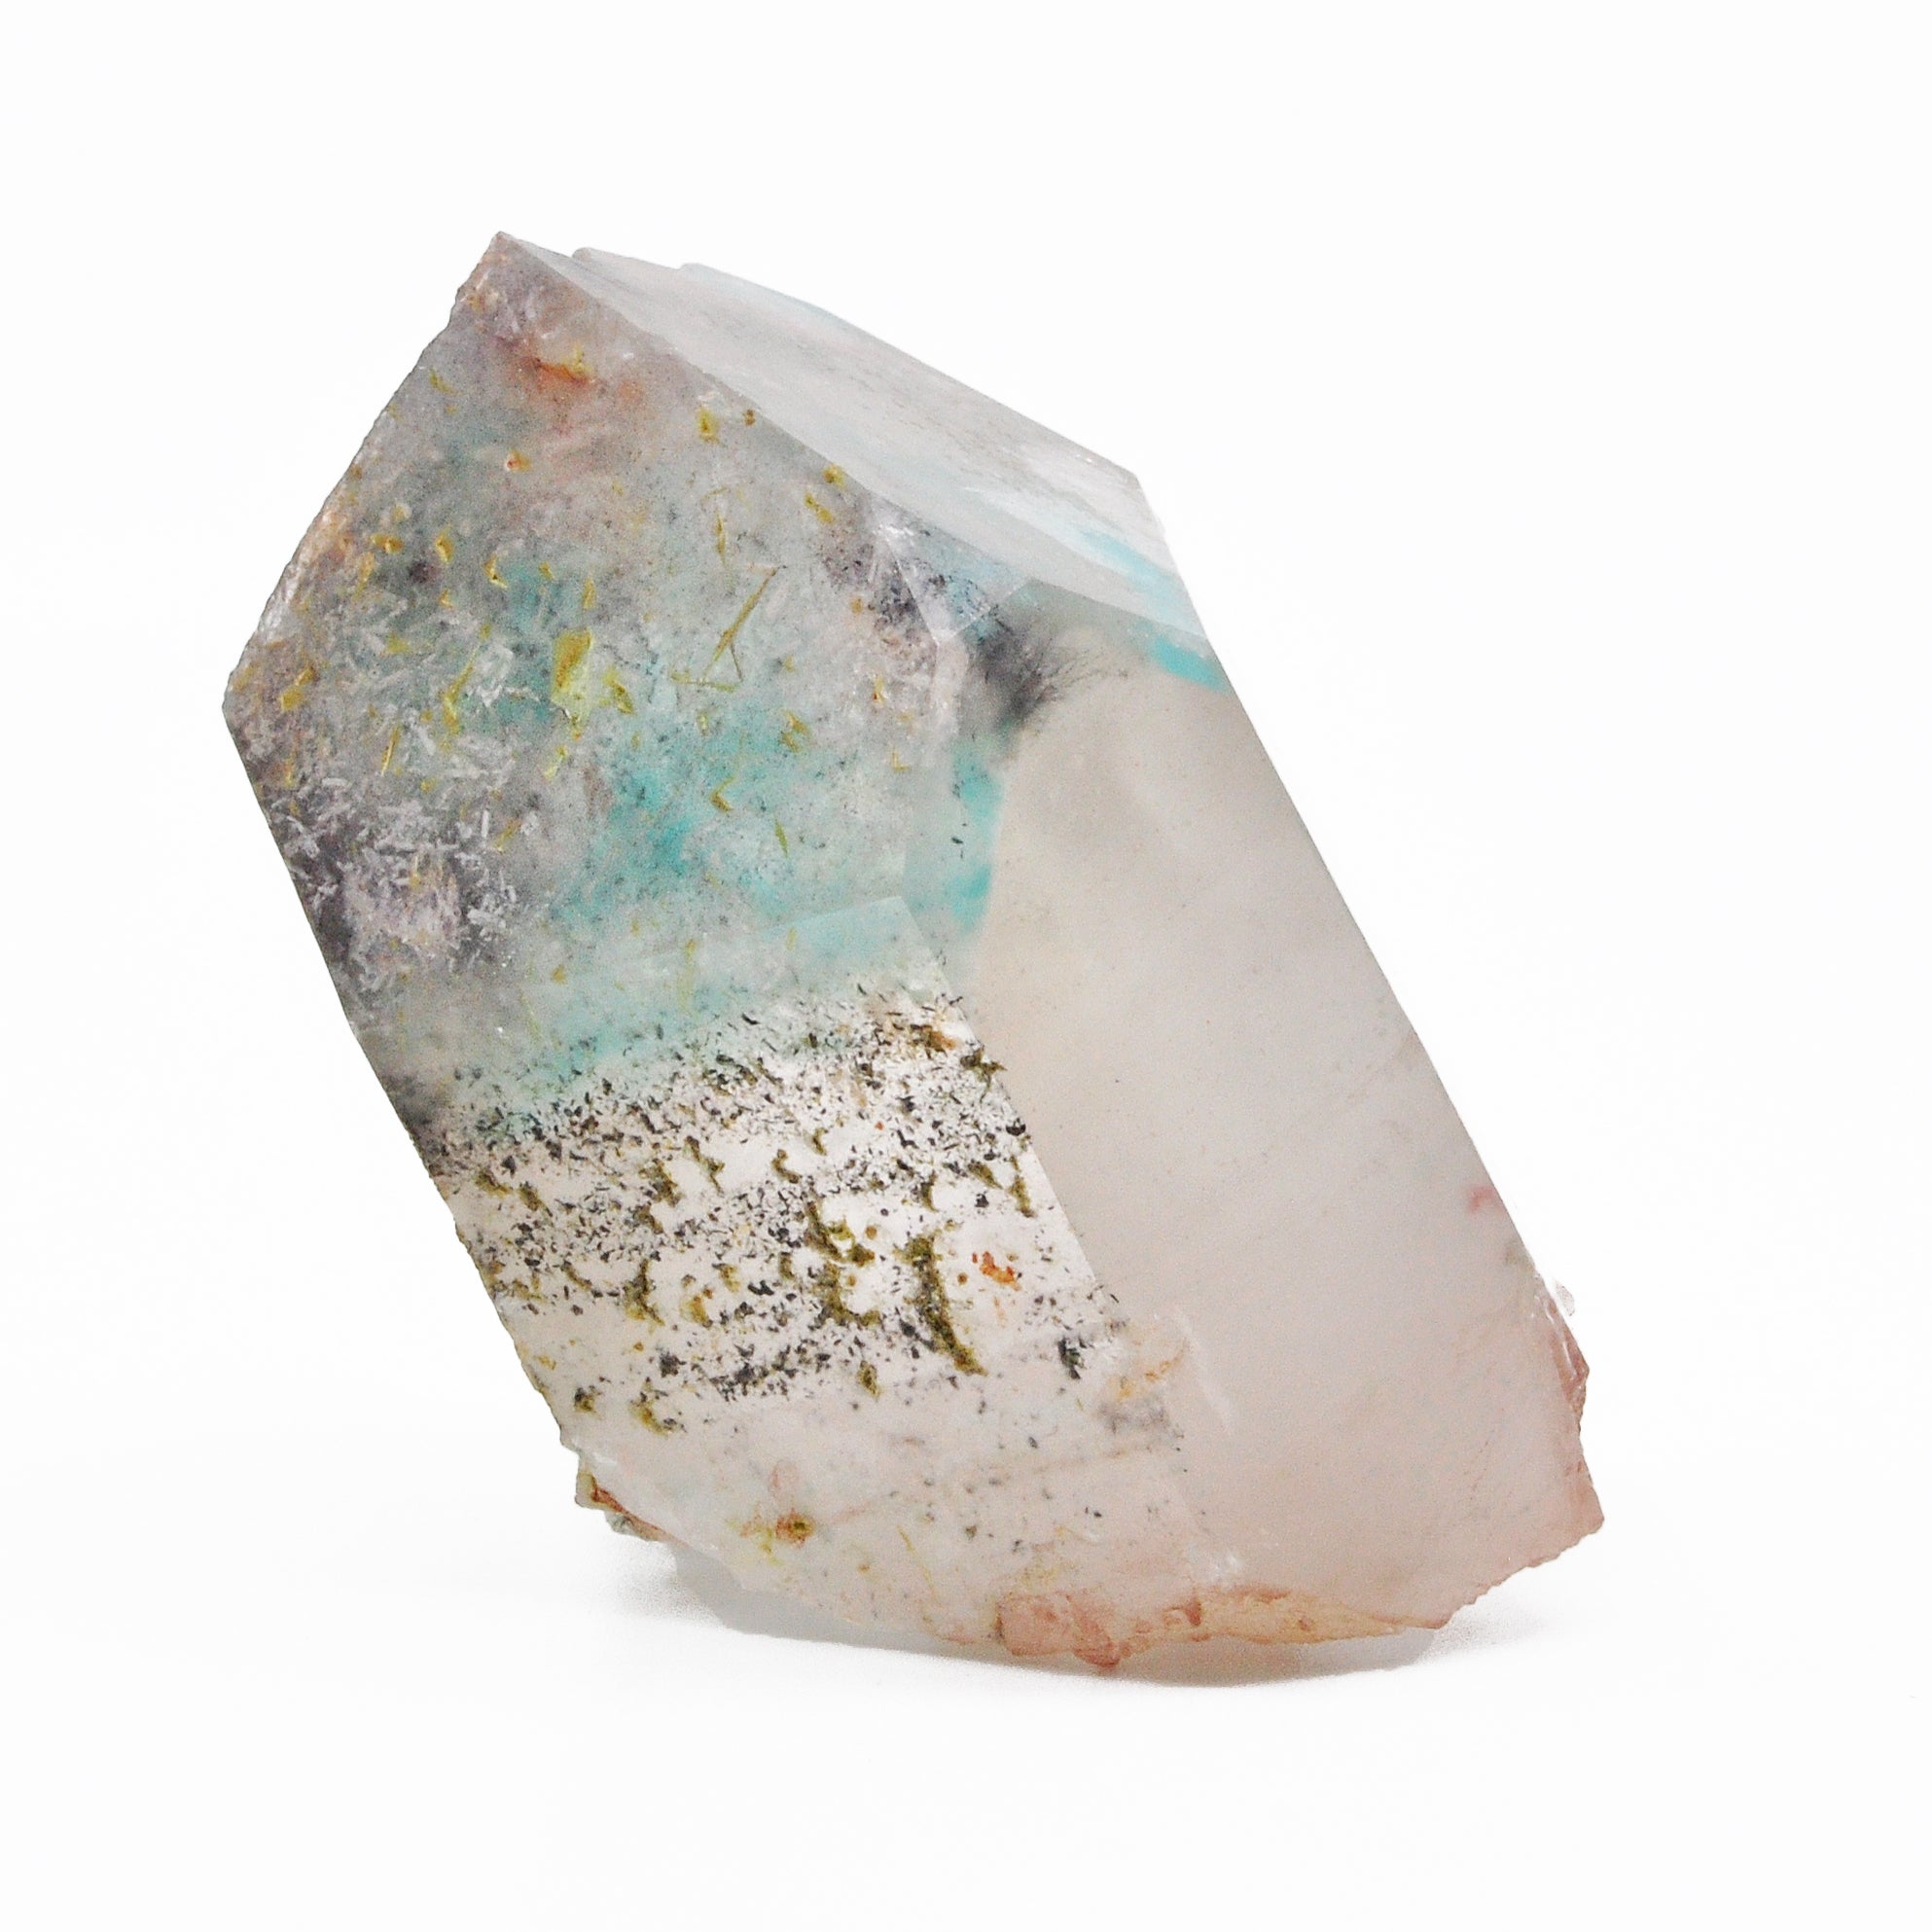 Ajoite in Quartz 2.65 inch 168 gram Natural Crystal Point - South Africa - EEX-487 - Crystalarium